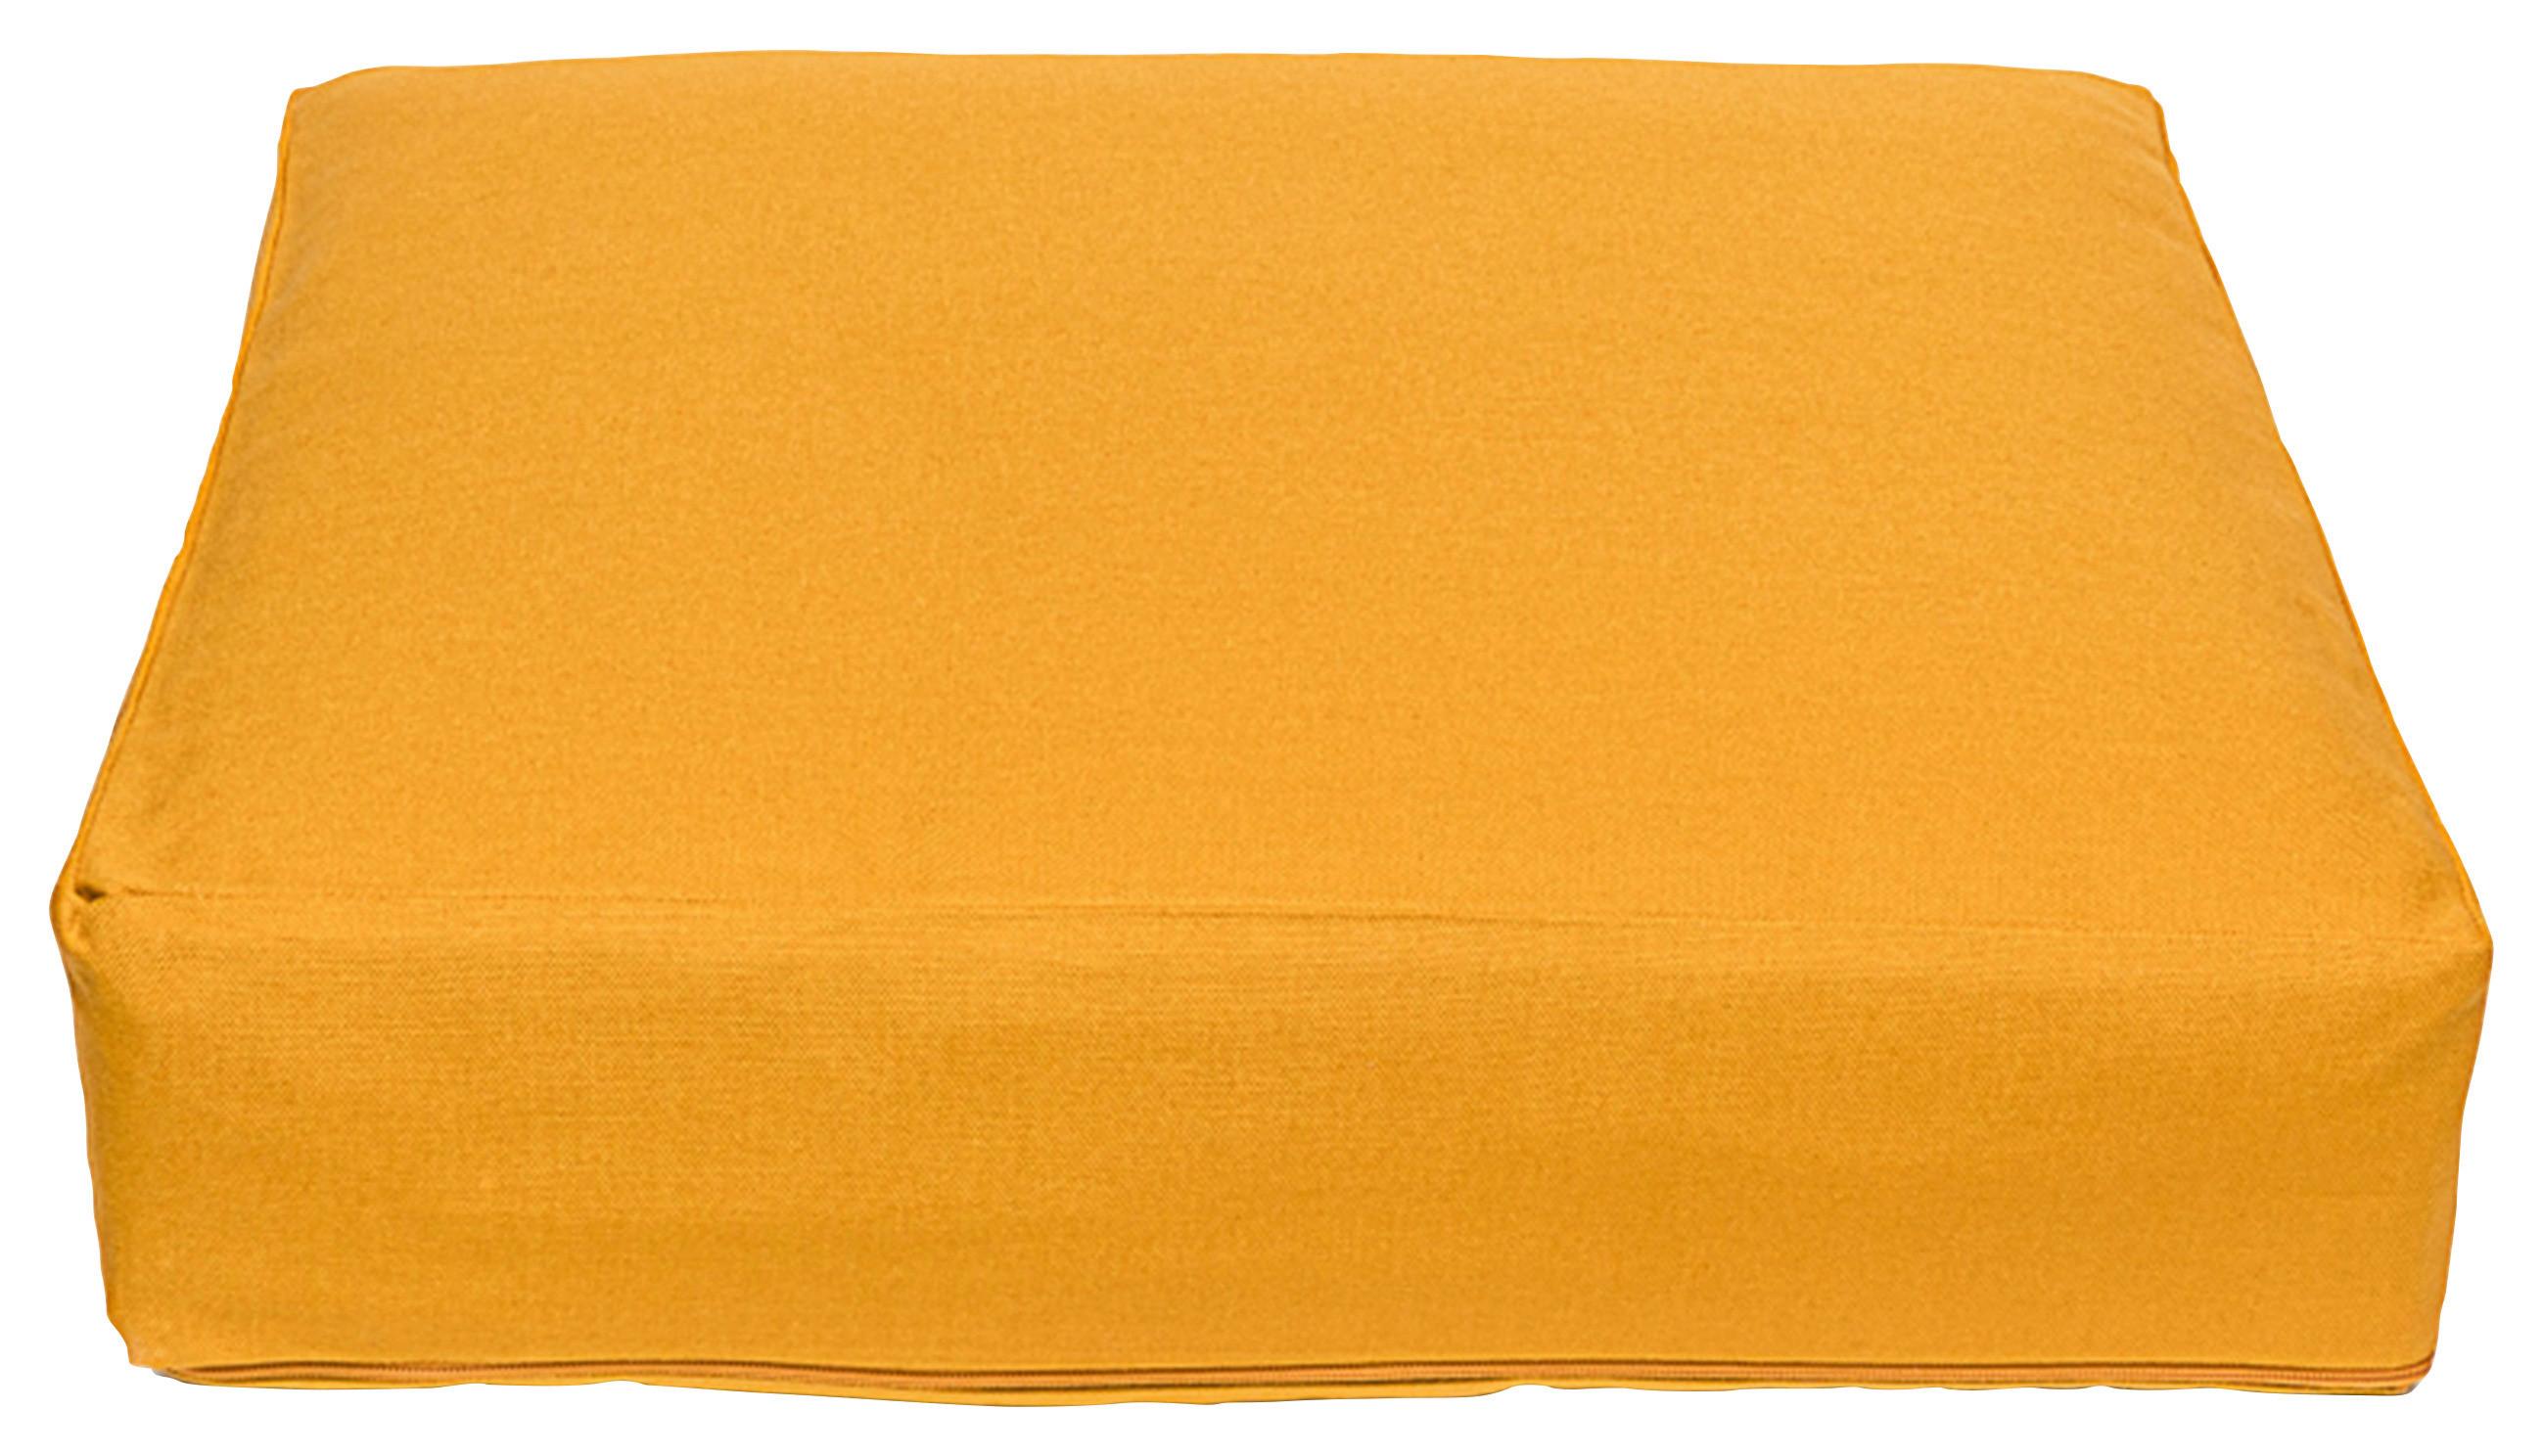 Boxkissen Lars in Gelb ca. 40x40x8cm - Gelb, KONVENTIONELL, Textil (40/40/8cm) - Mary's